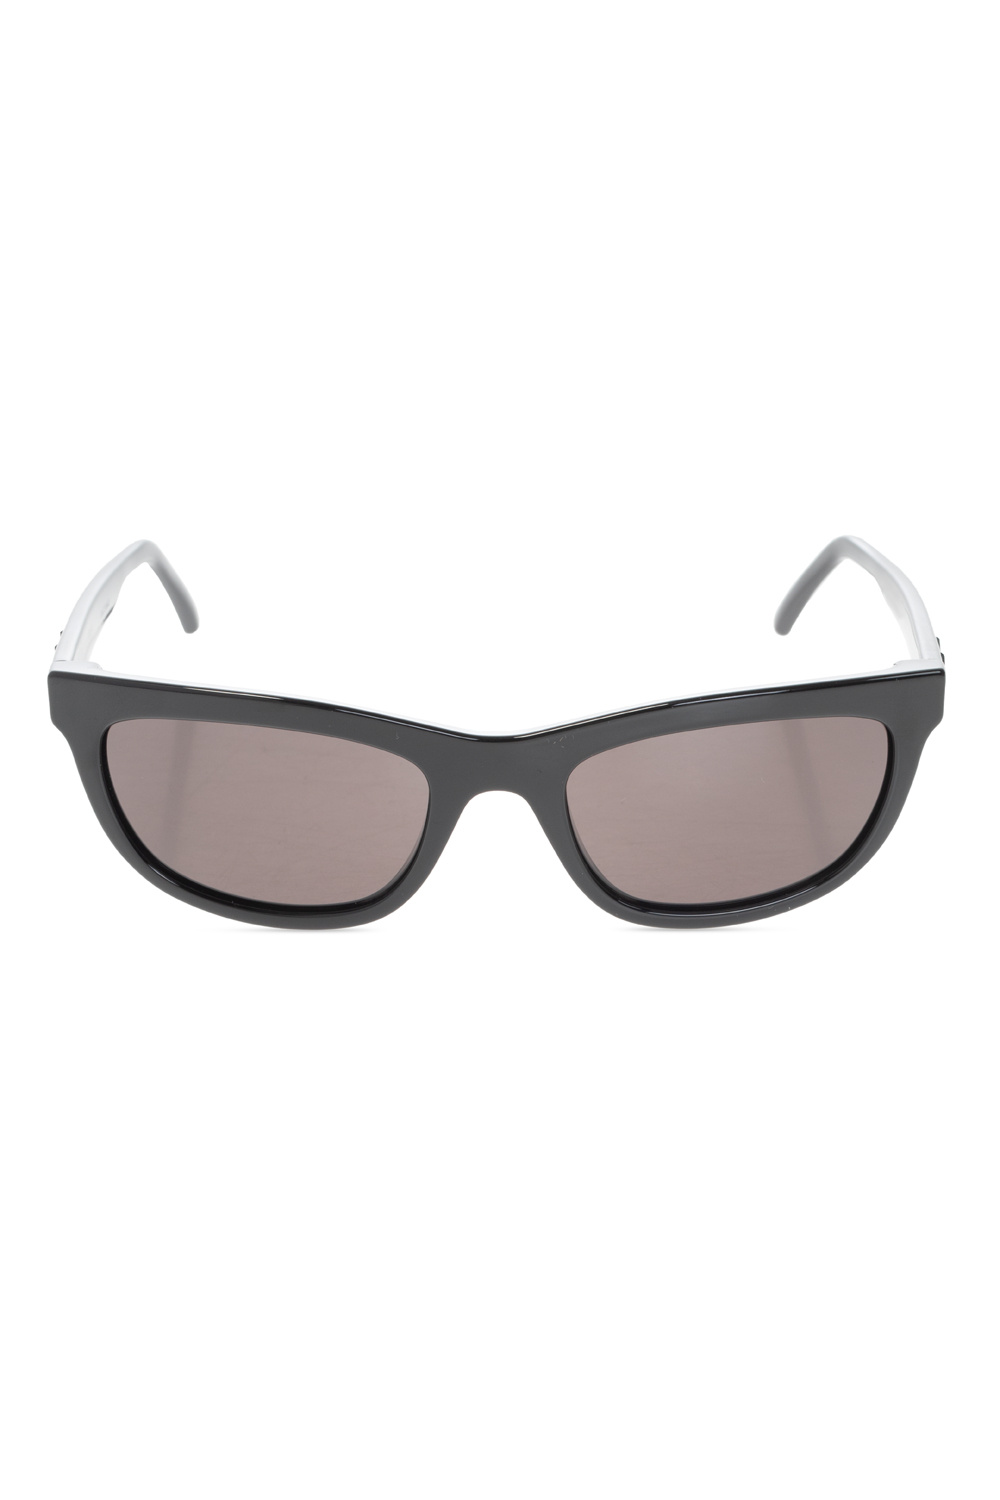 Saint Laurent ‘SL 493’ sunglasses